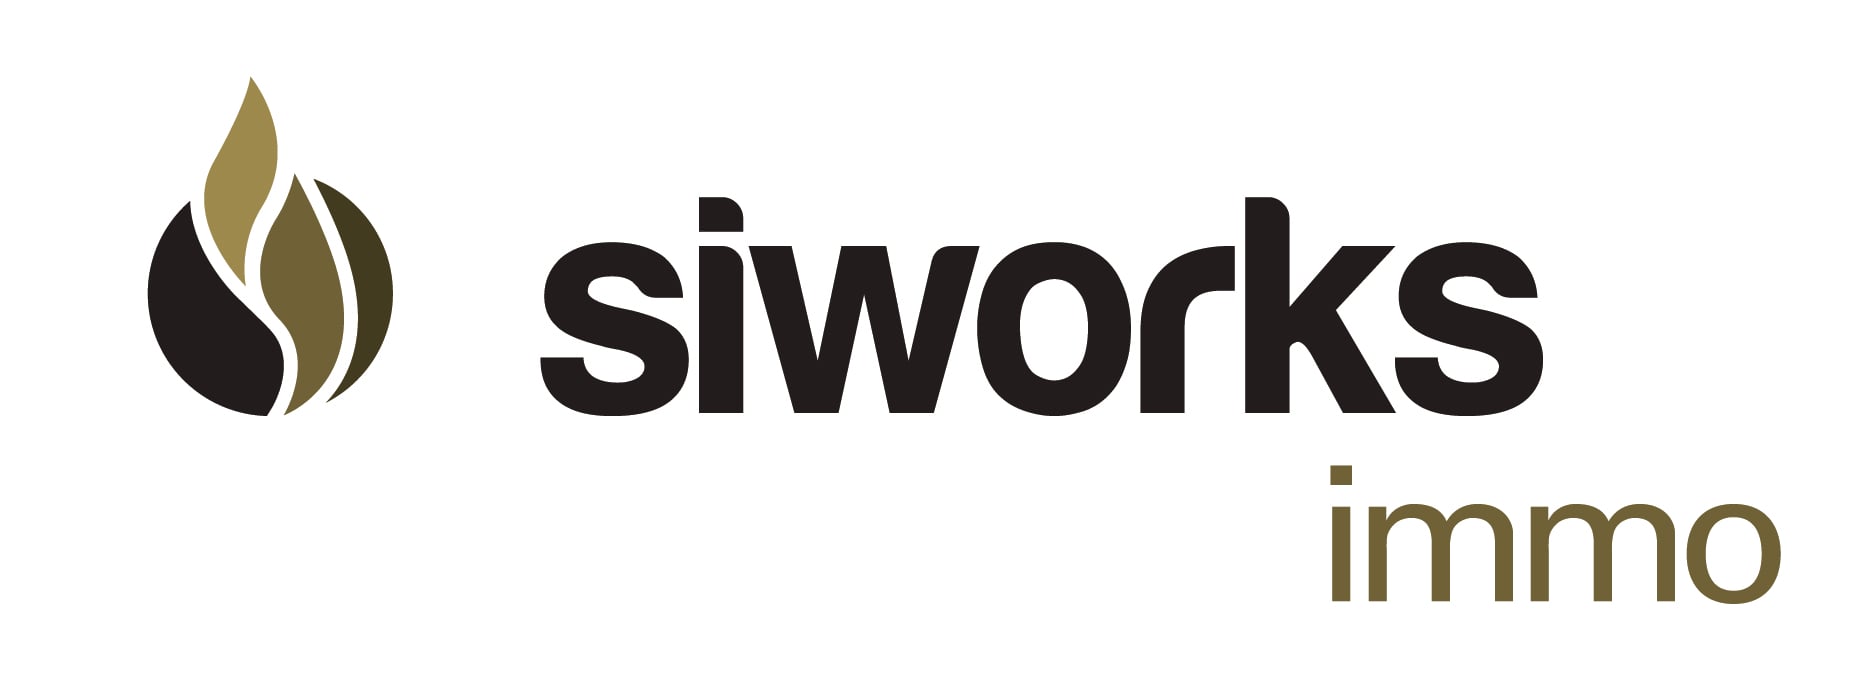 Logo Siworks immo